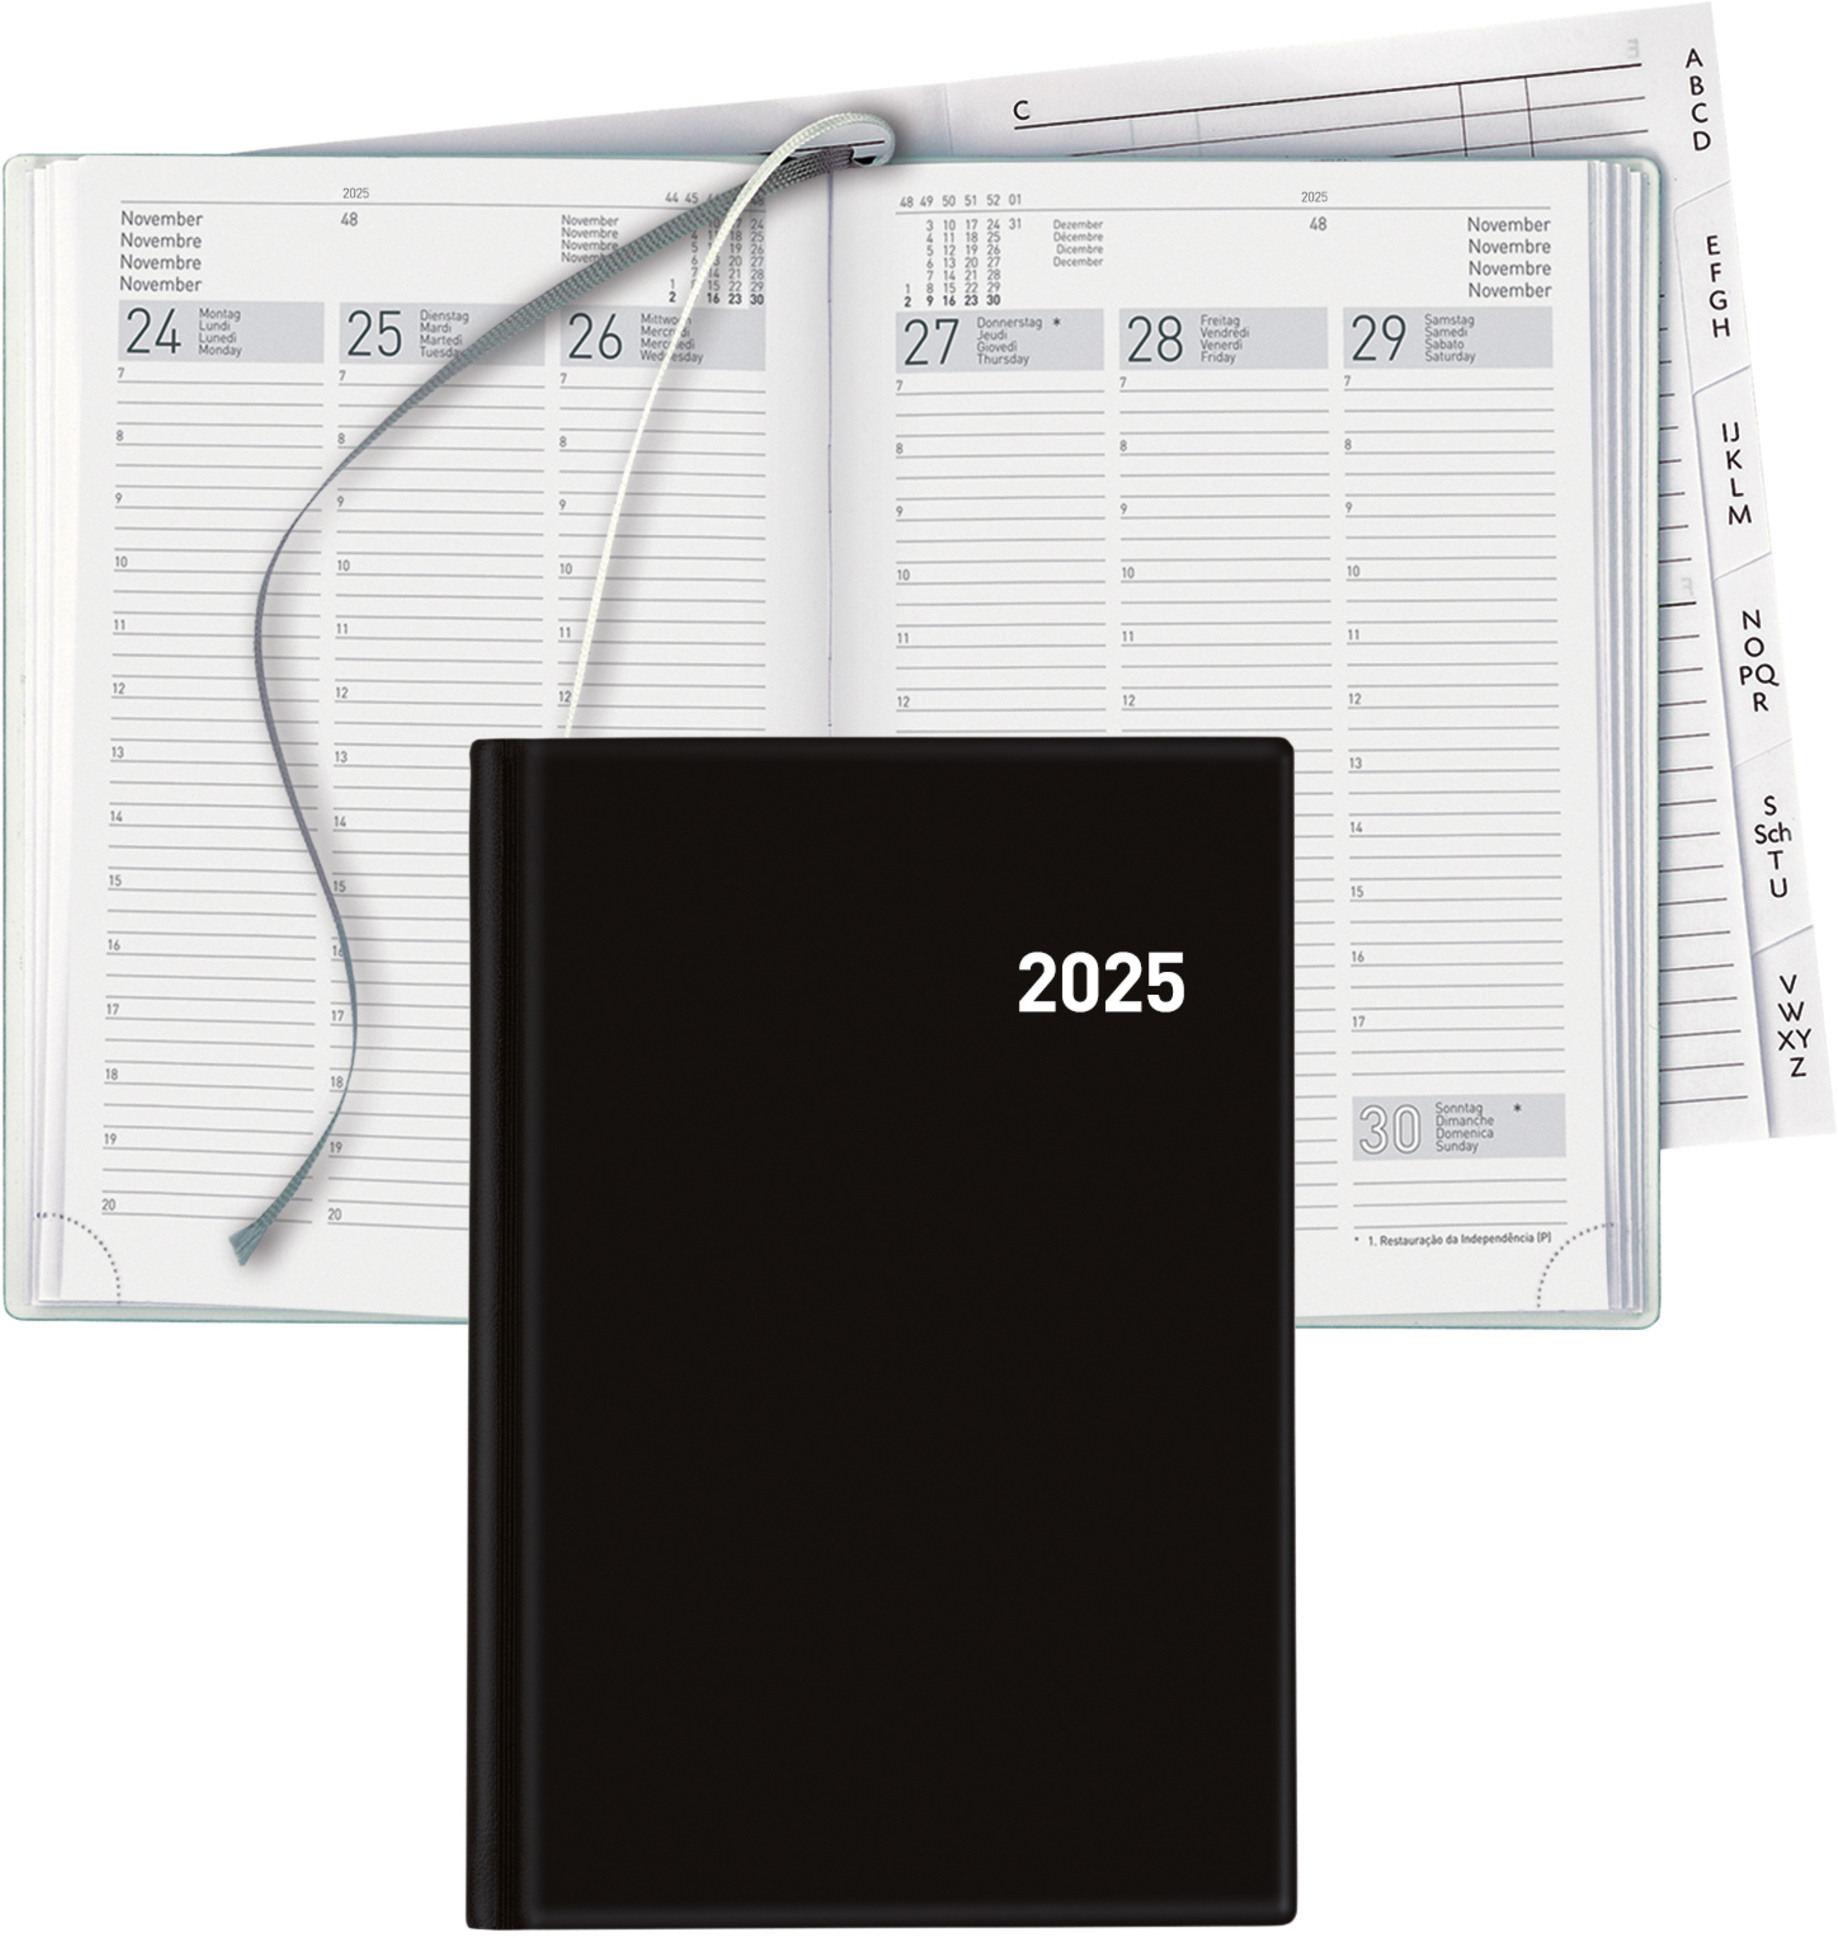 BIELLA Agenda Terminia 2025 817535020025 1S/2P noir ML 14.5x20.5cm